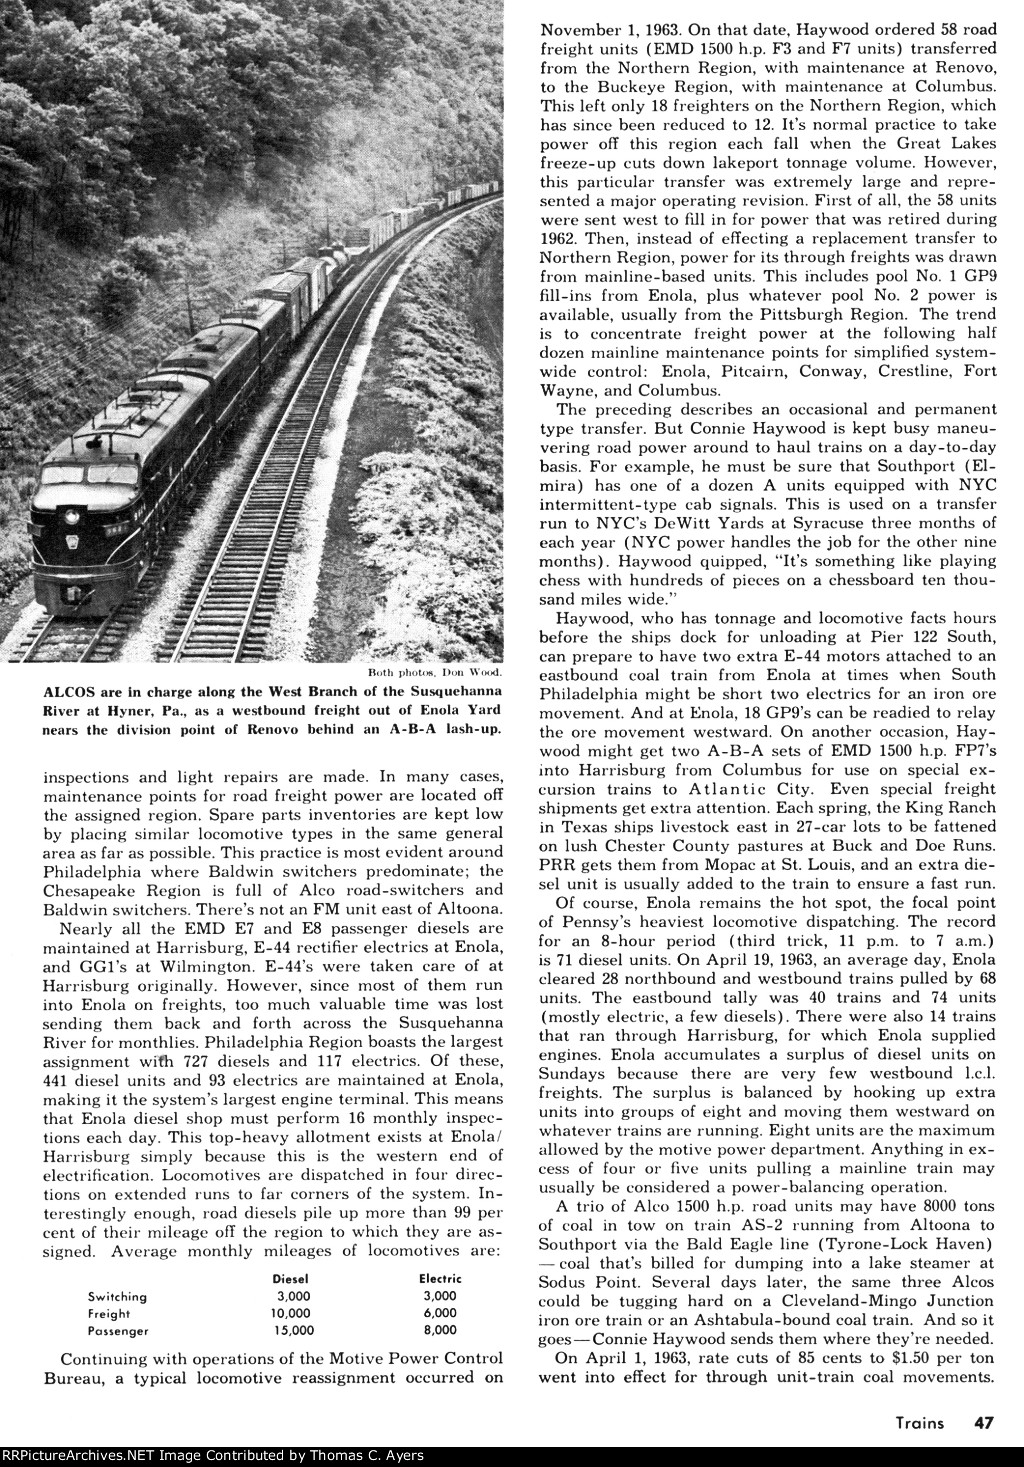 "Largest Locomotive Fleet," Page 47, 1964